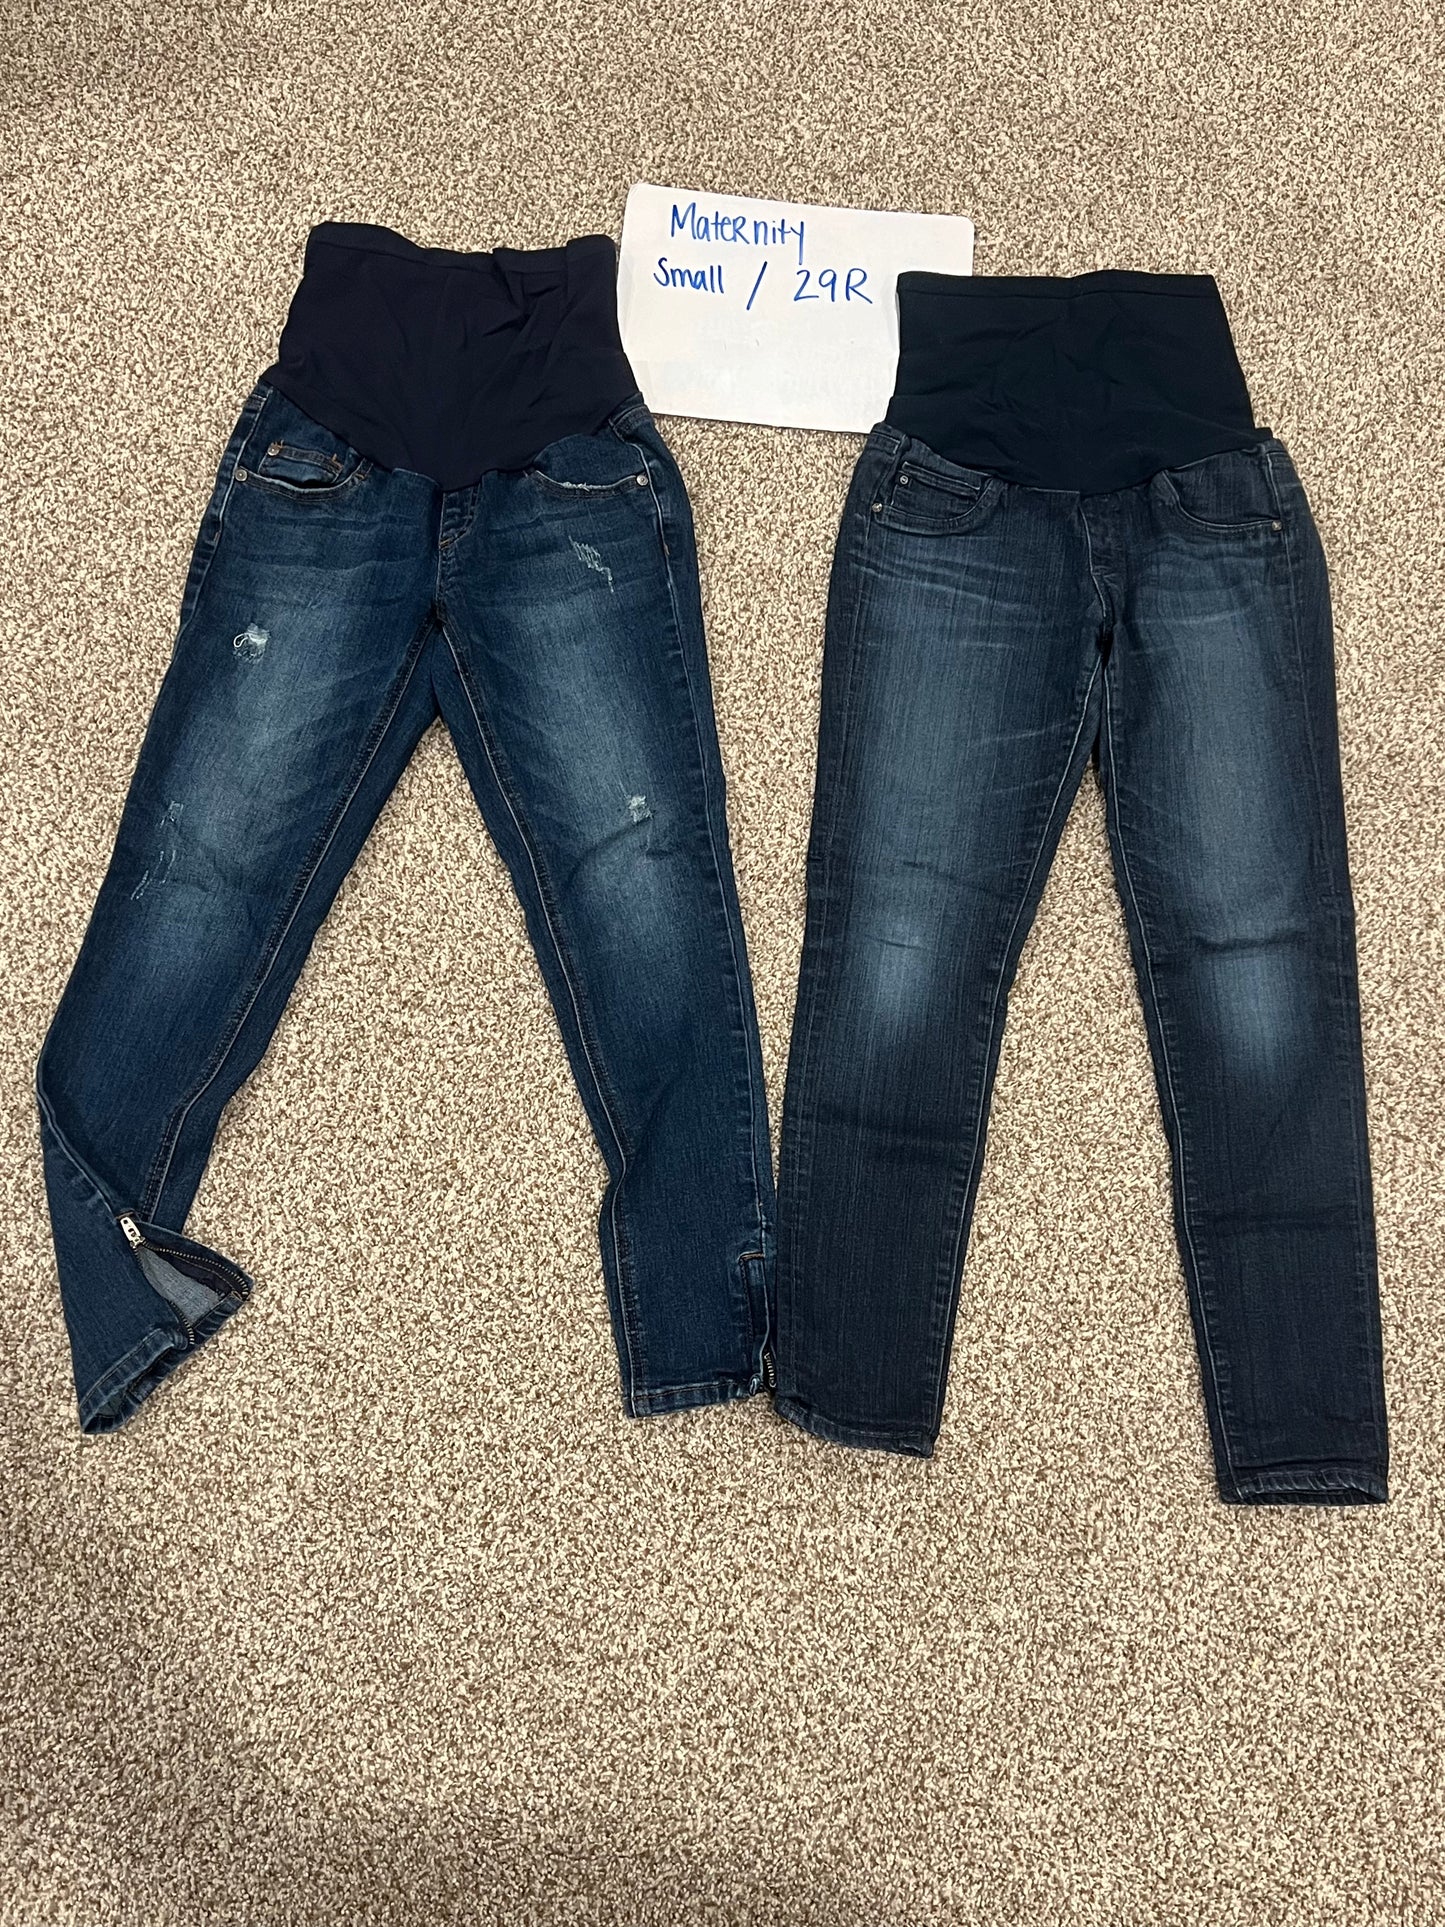 Small / 29R Maternity Jeans set (2), EUC